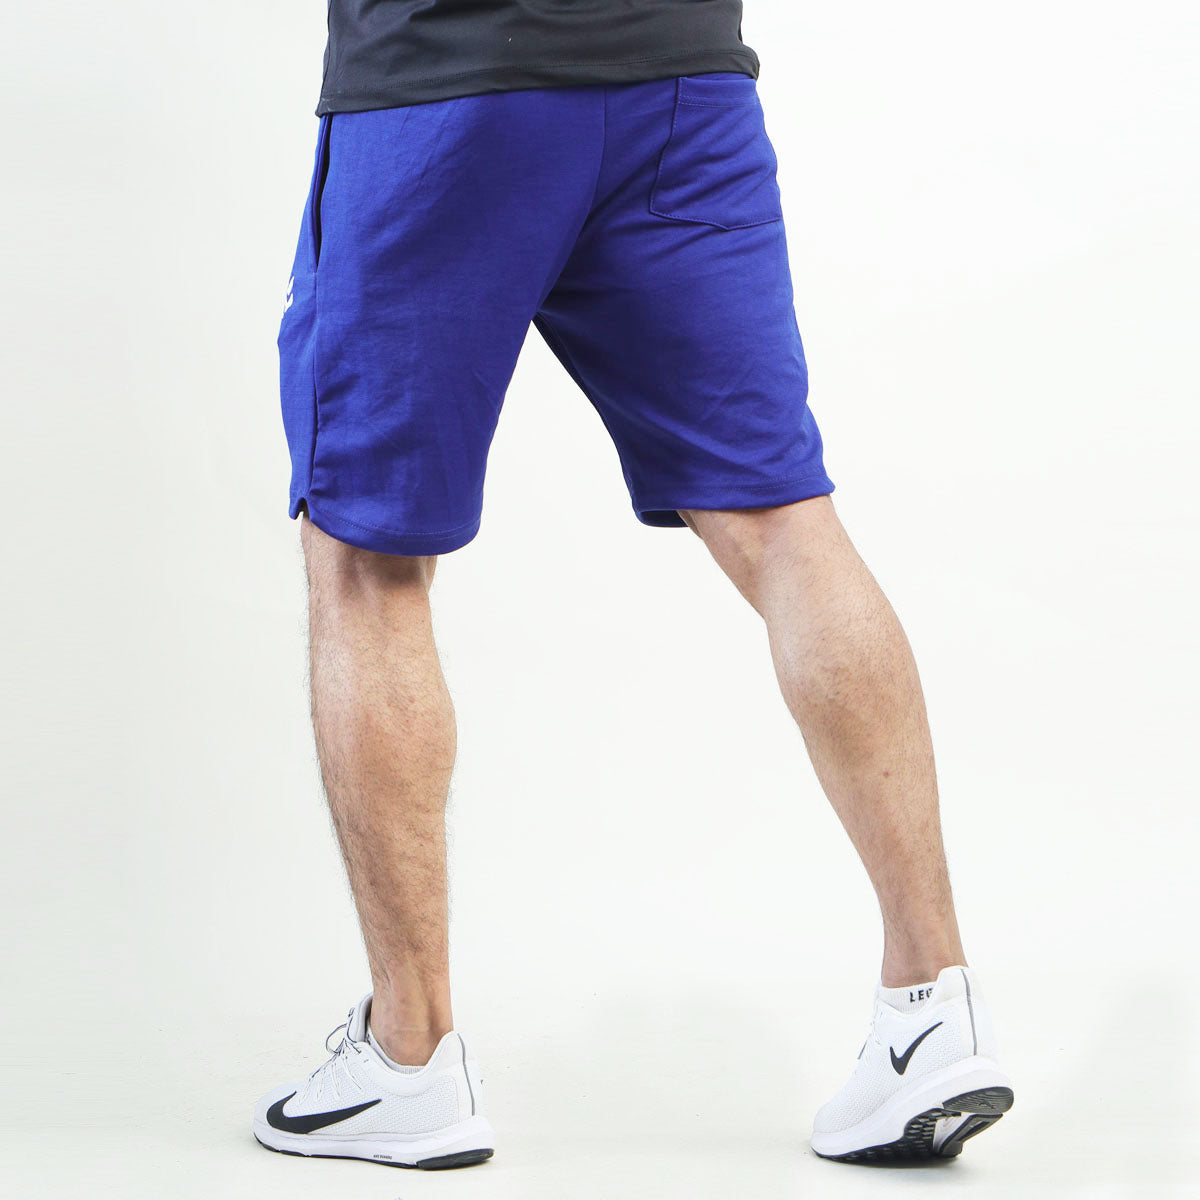 Bluish Perfect Dryfit Shorts